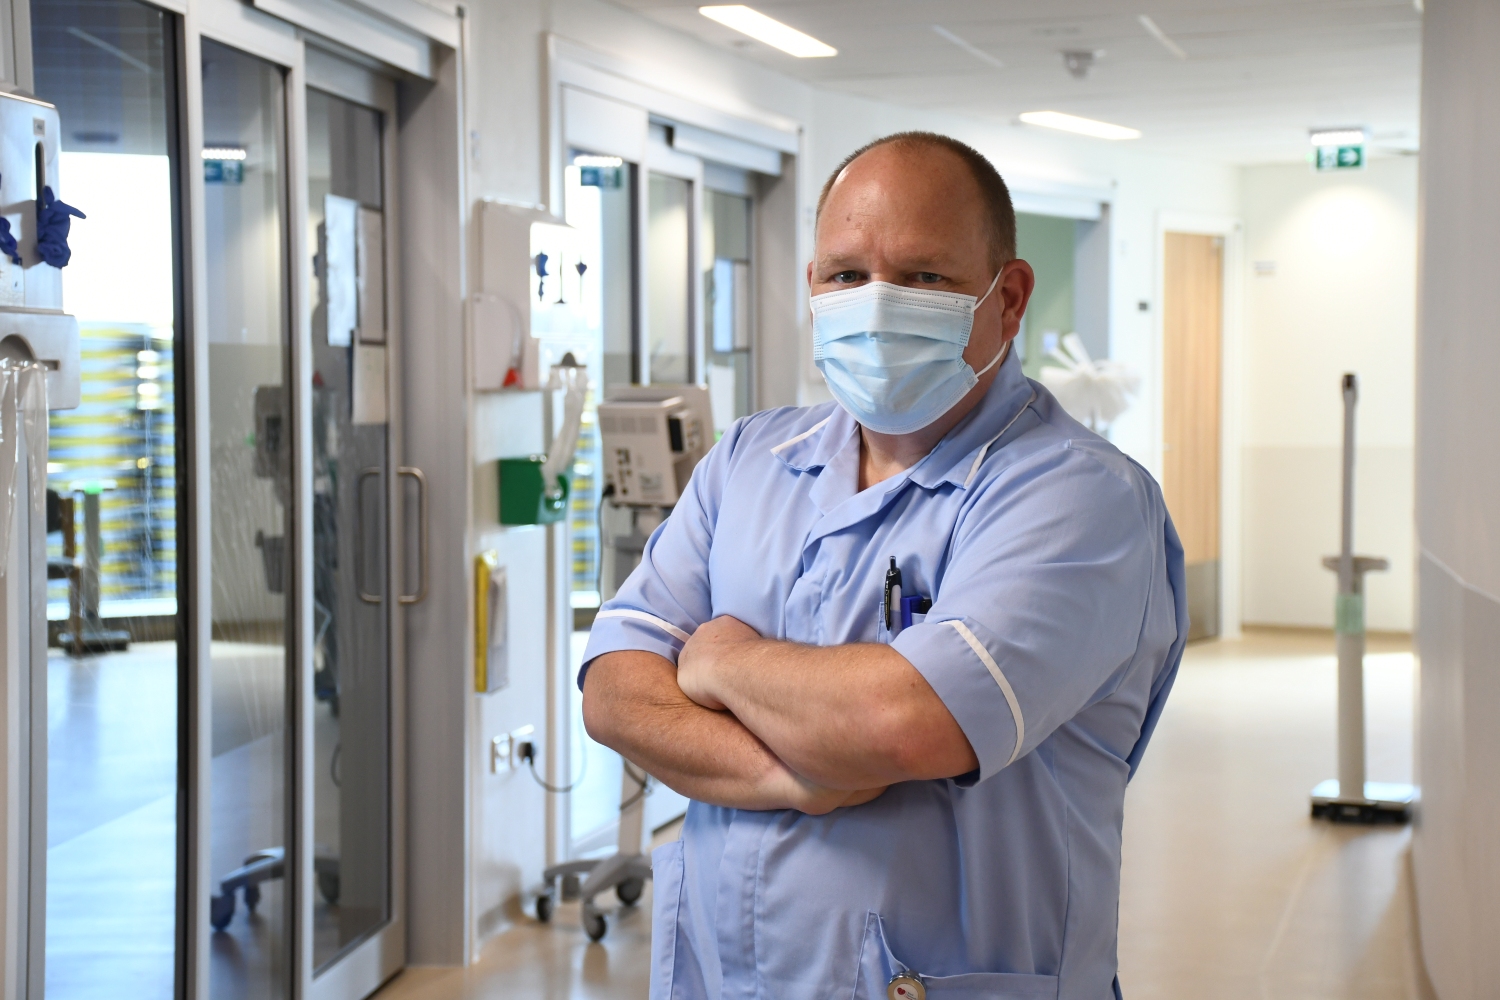 Robin in a pale blue uniform standing in a hospital ward corridor.